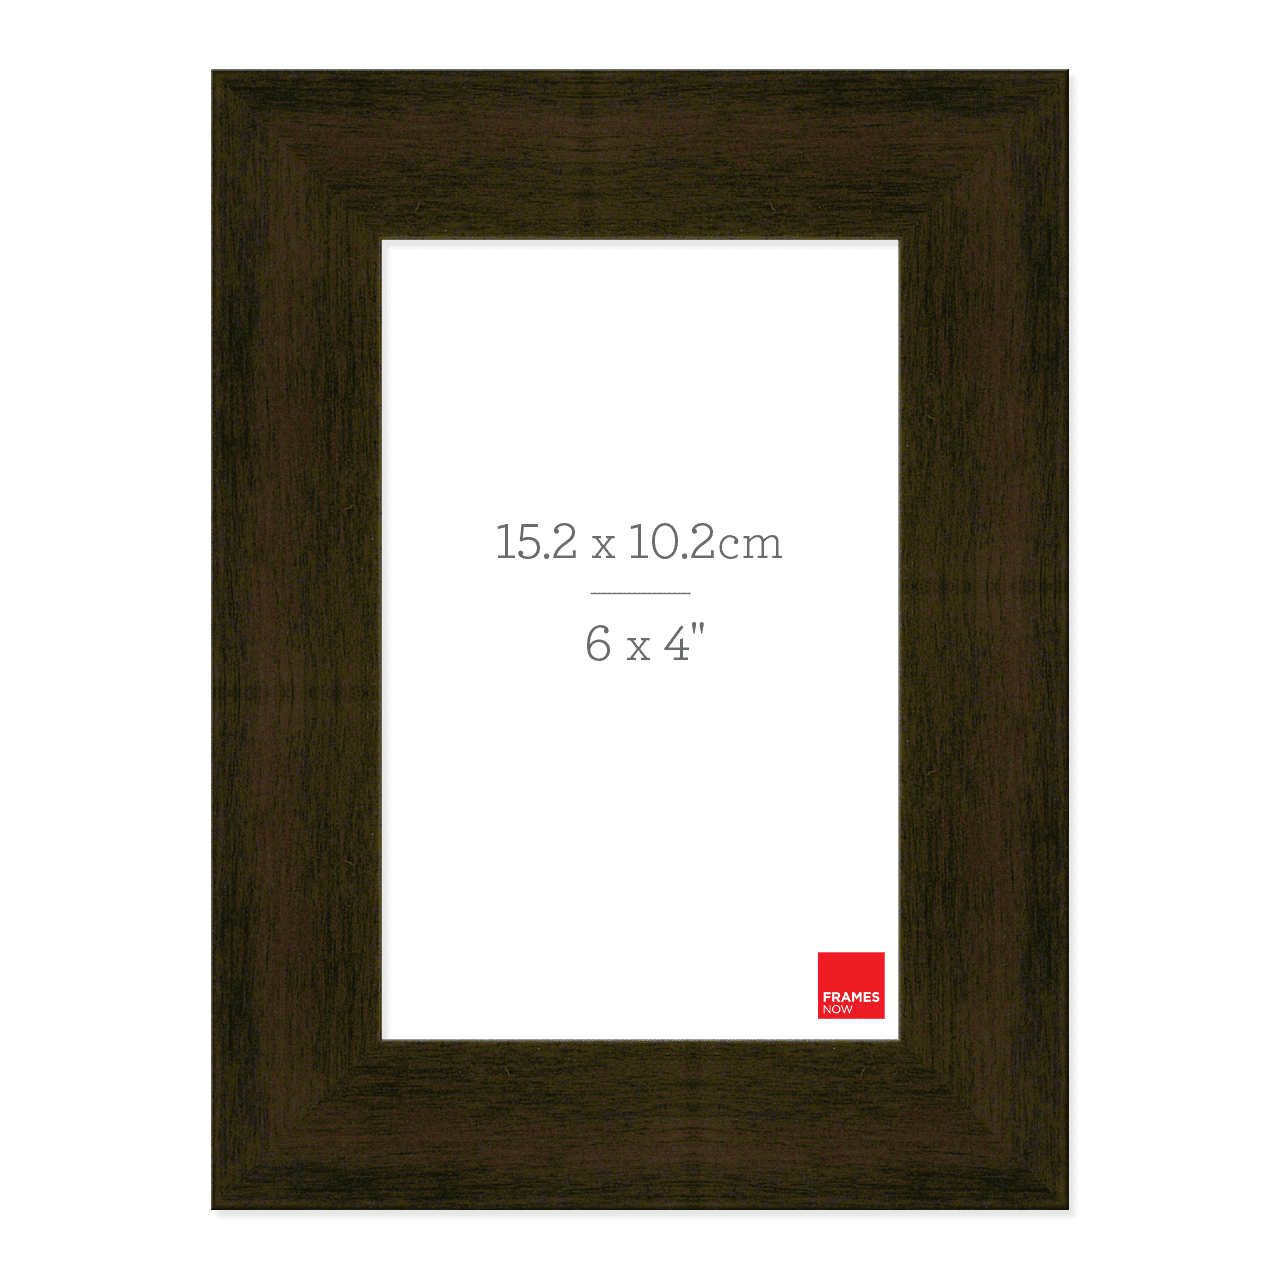 Premium Mocha Timber Finish Picture Frame for 15.2 x 10.2cm Artwork